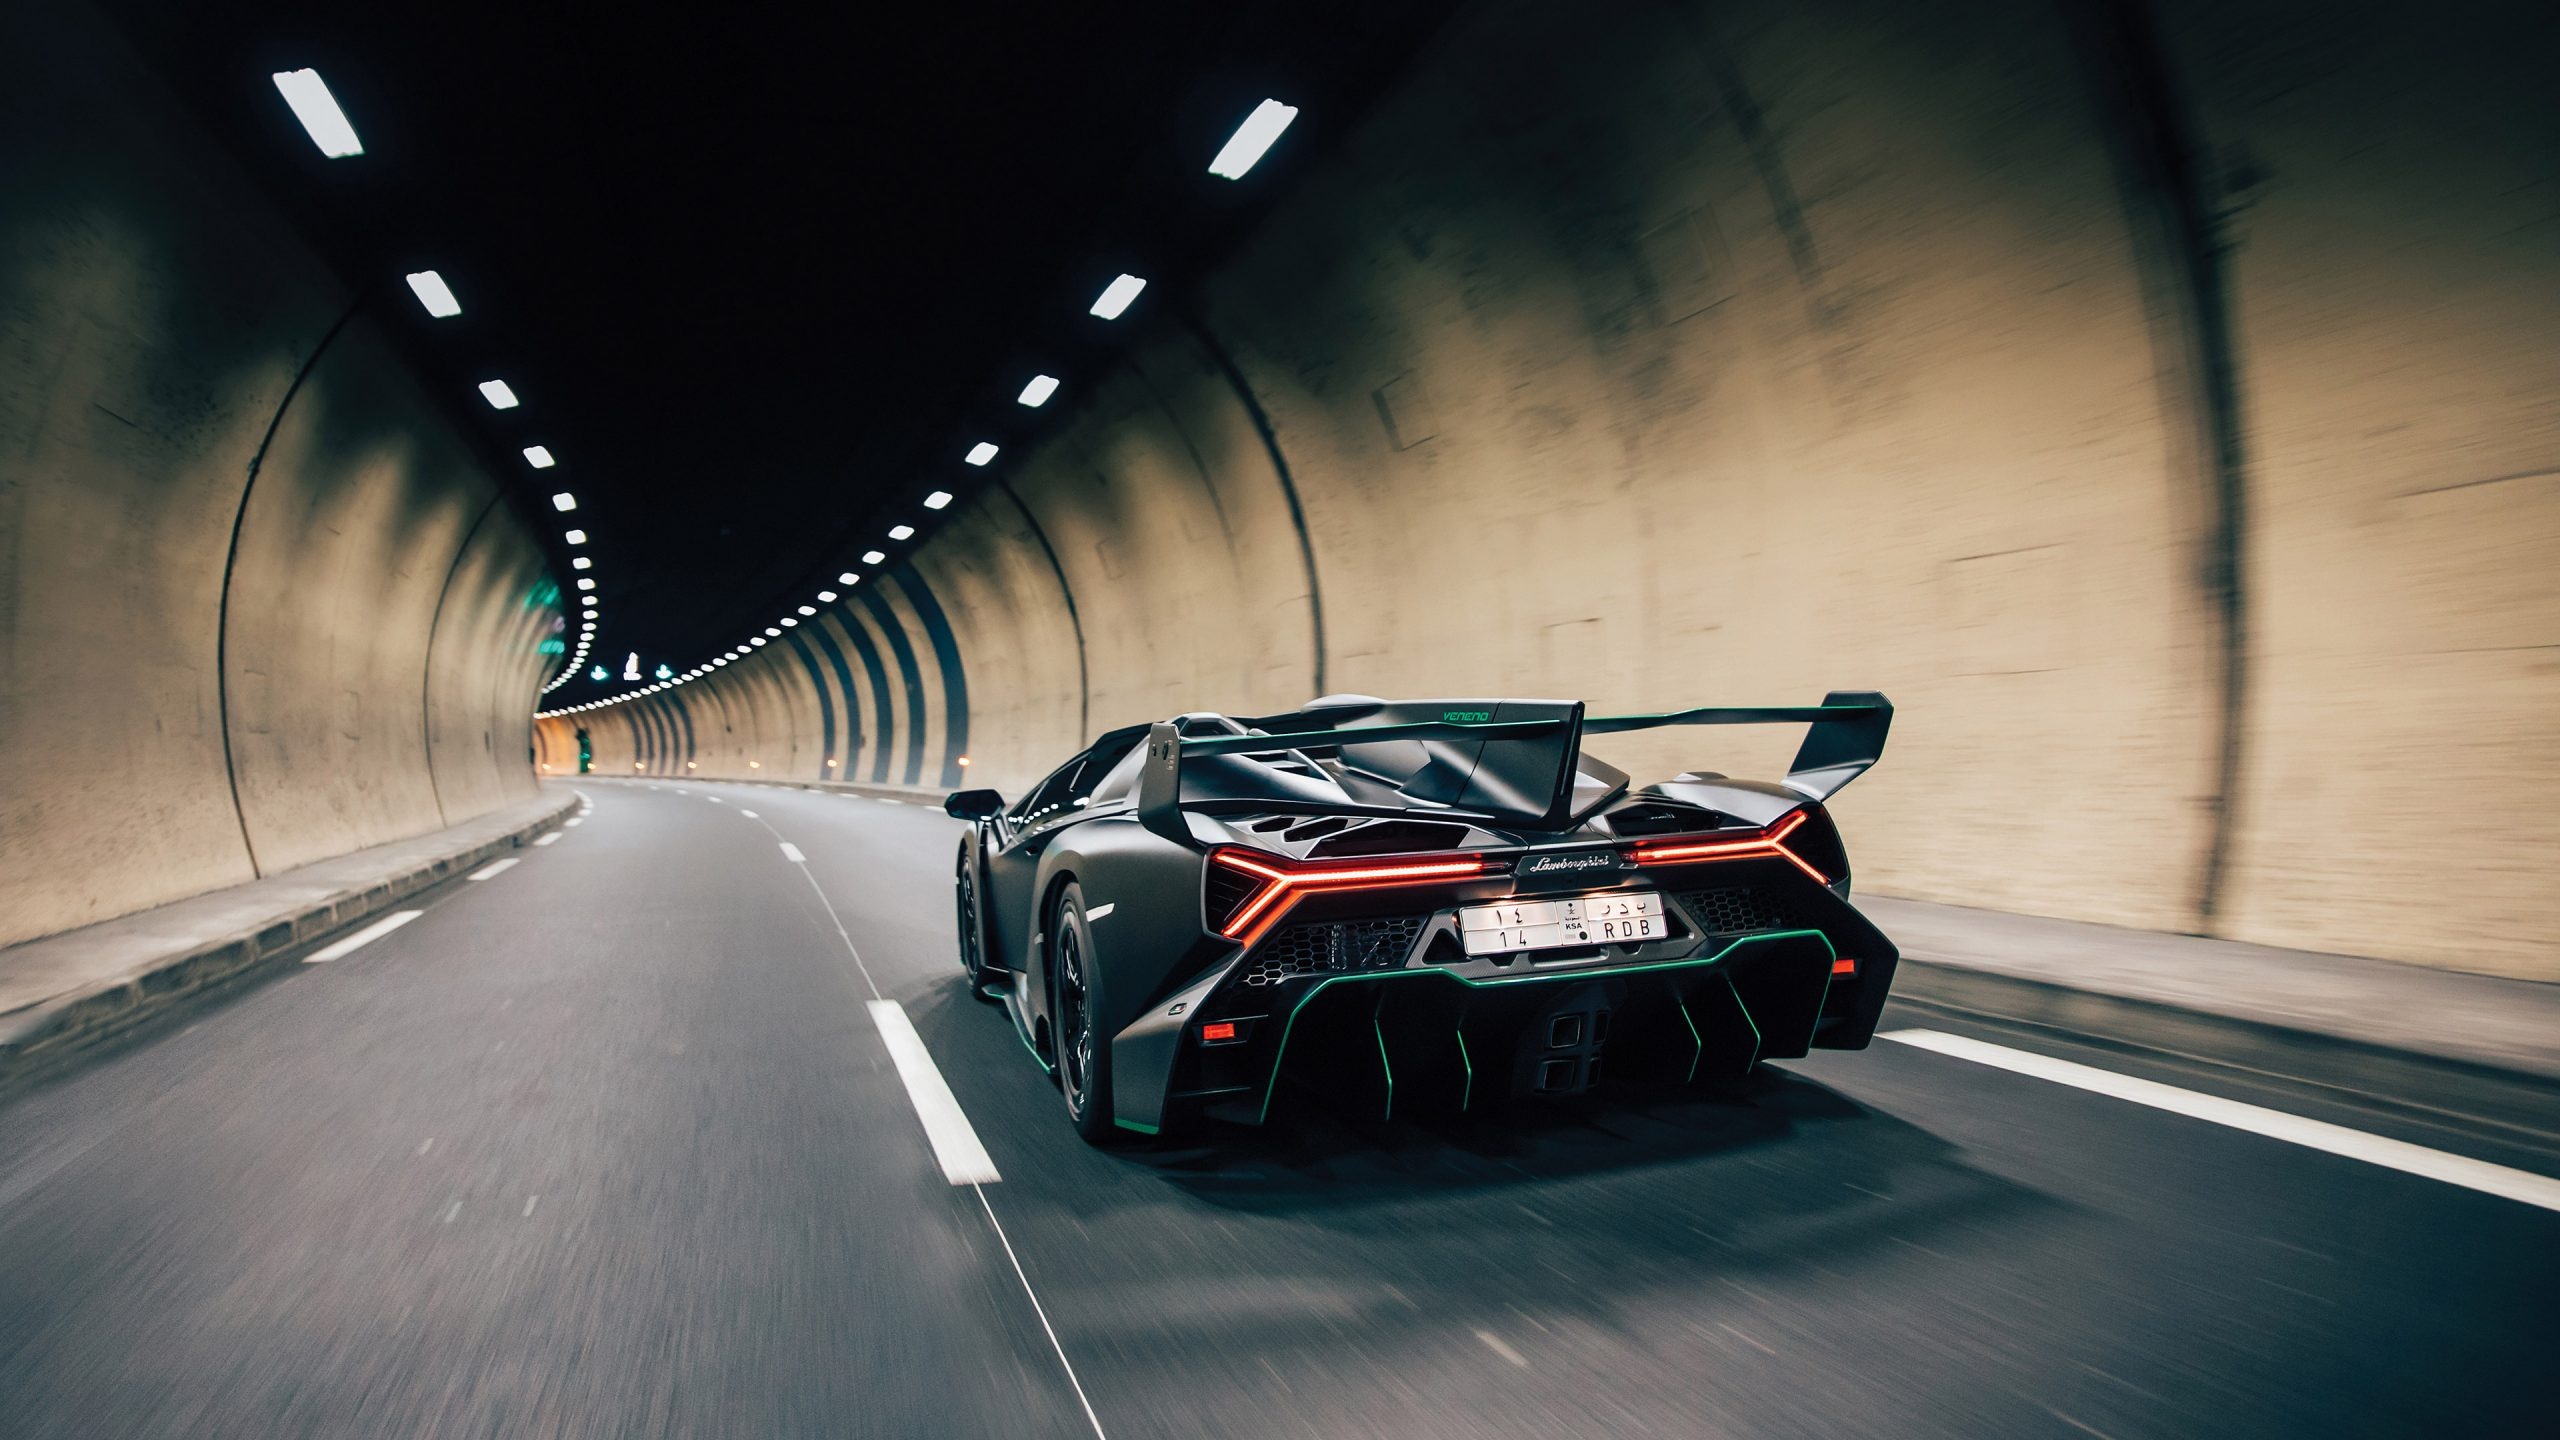 Lamborghini Veneno, Roadster wallpaper, Automotive greatness, Top-notch design, 2560x1440 HD Desktop